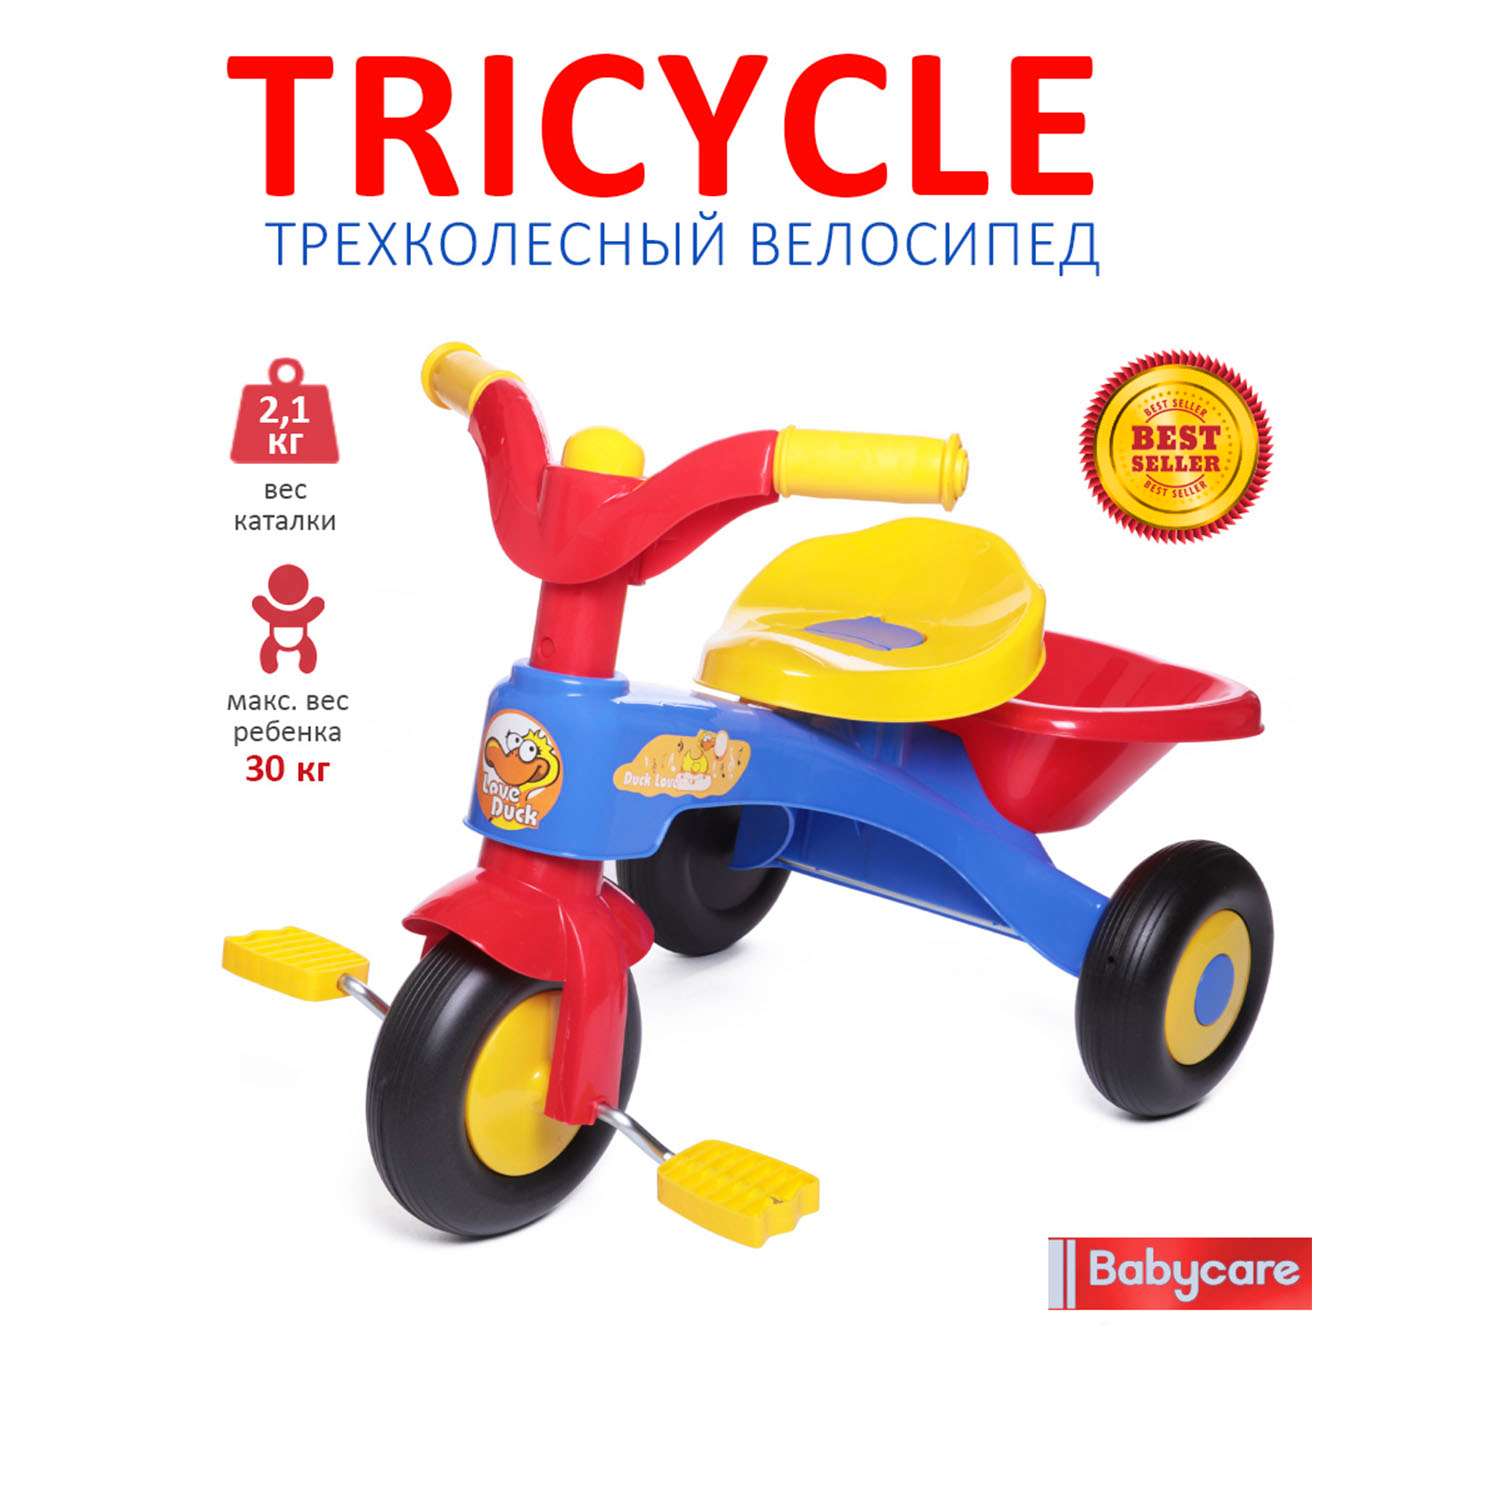 Велосипед трехколесный BabyCare Tricycle синий - фото 1